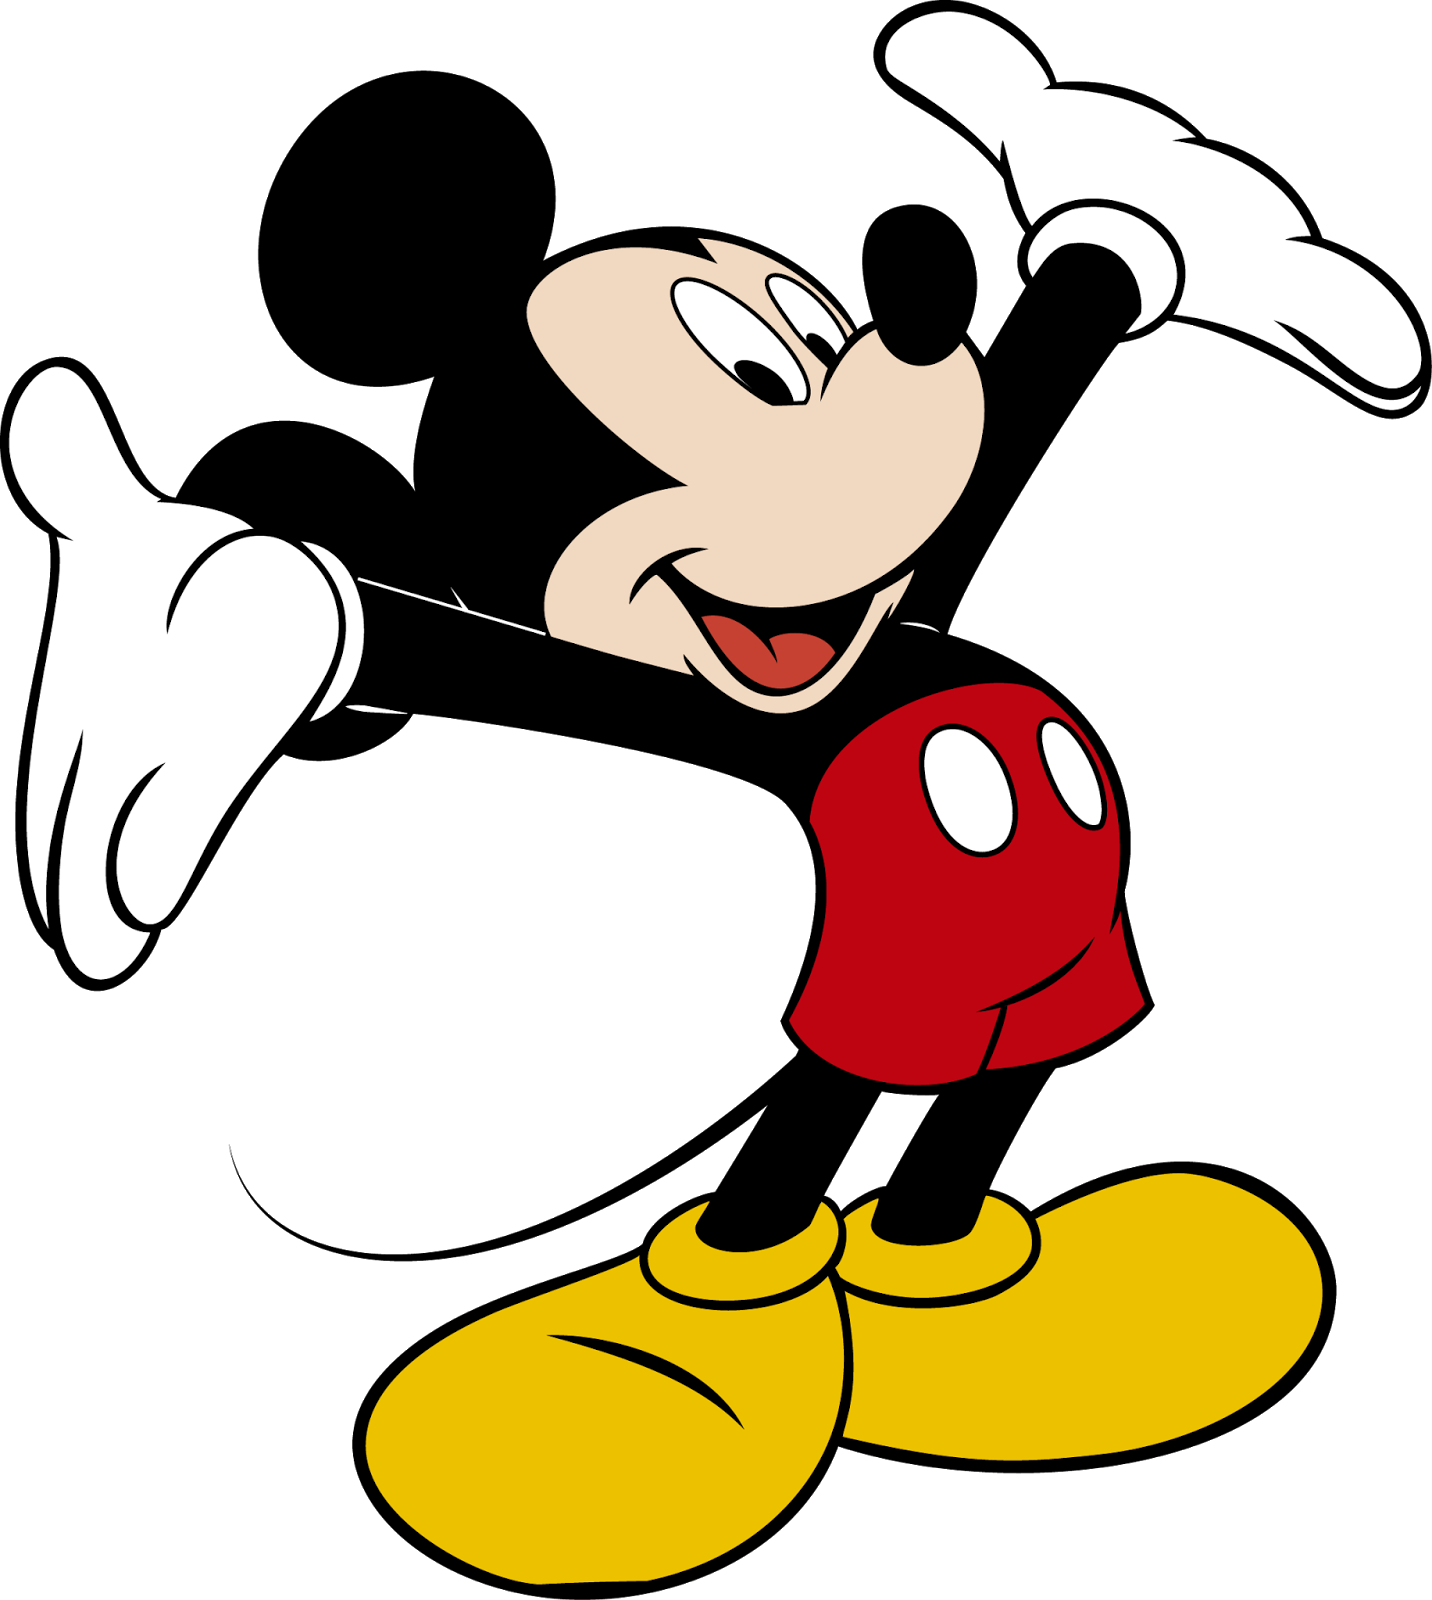 Imagens Png Mickey Mouse Fundo Transparente